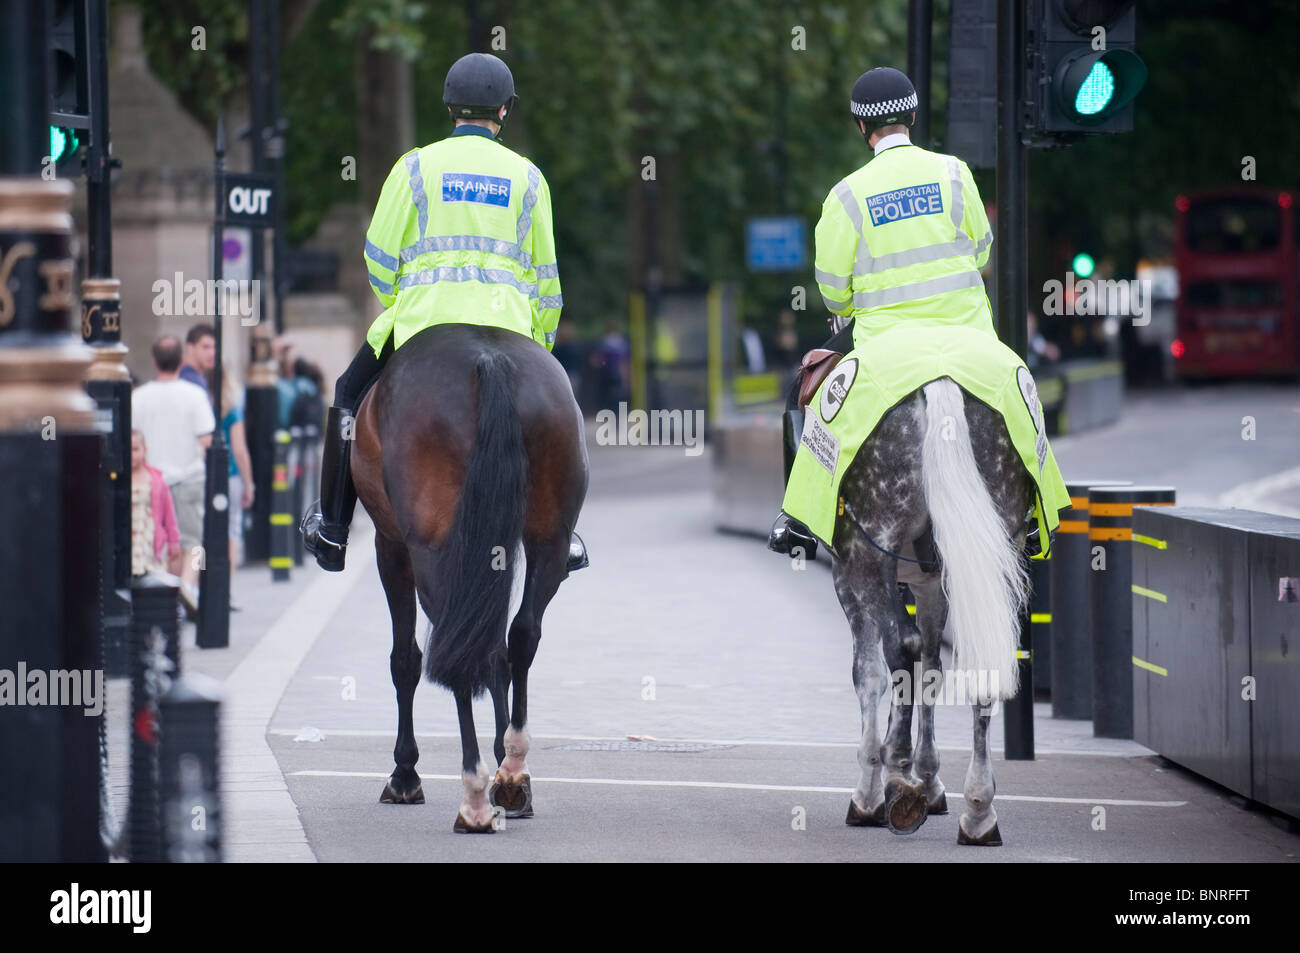 Metropolitan police officers regularly patrol the streets of London on horseback. Stock Photo